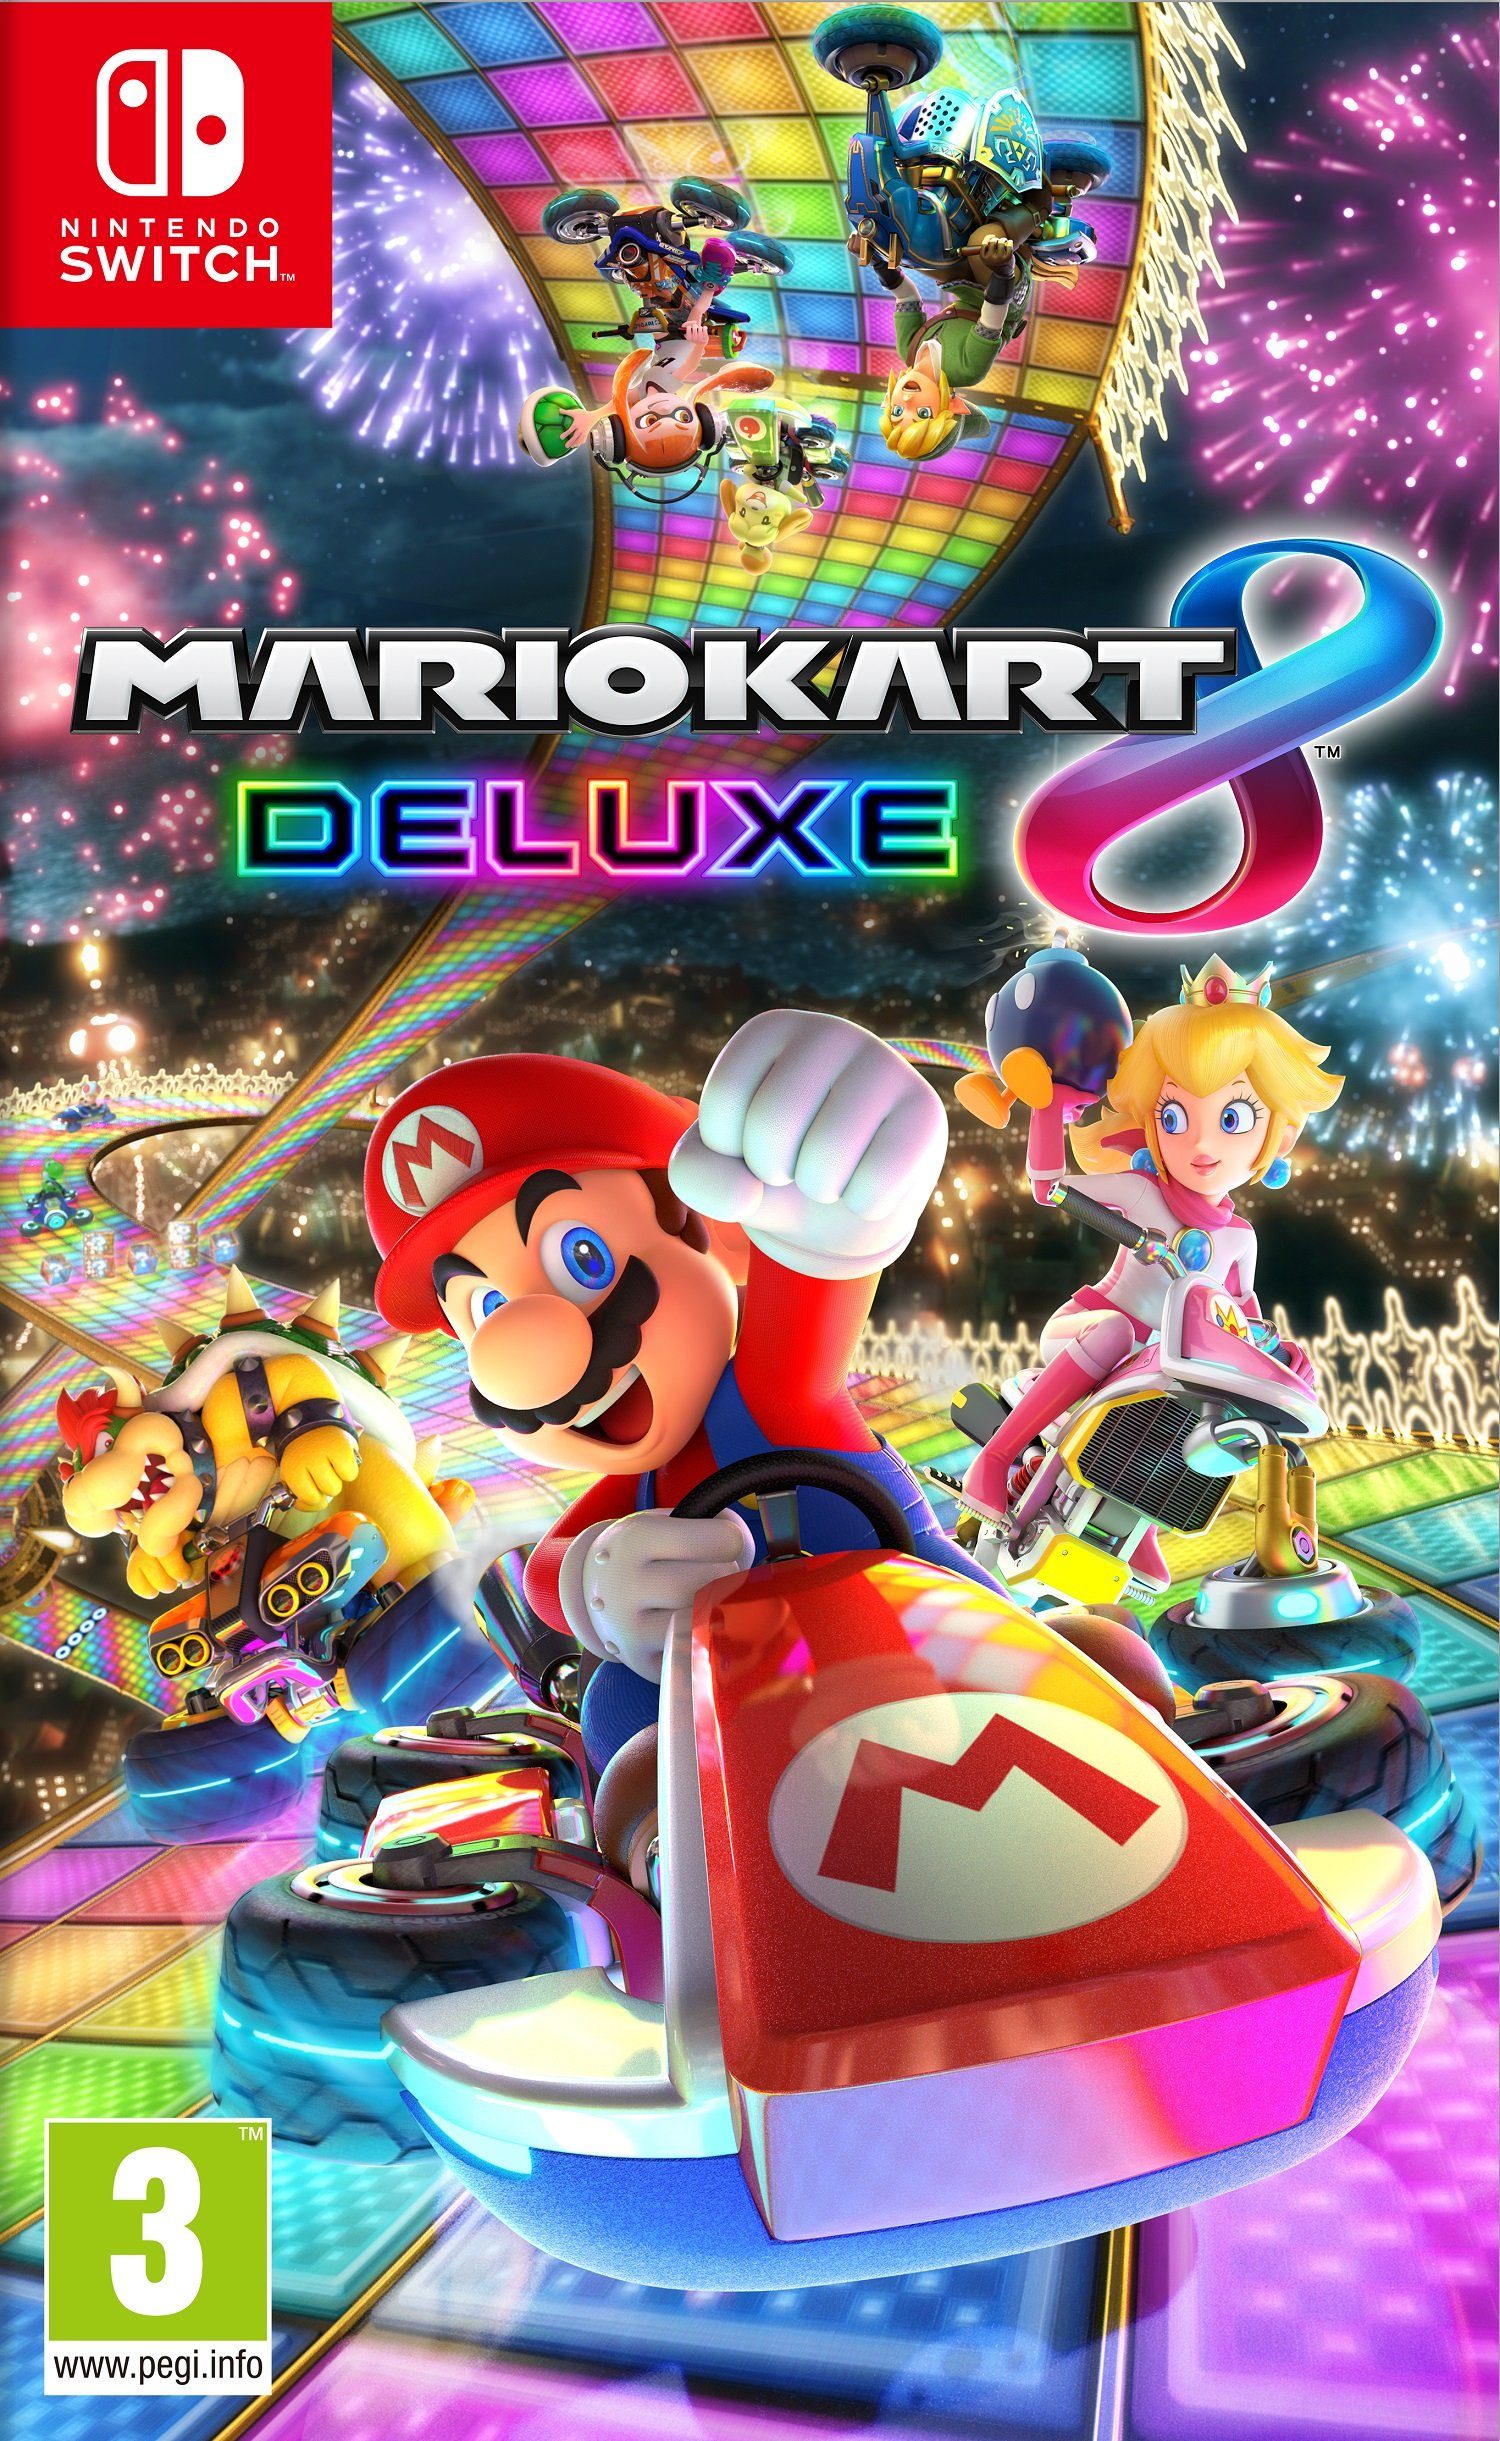 Otto - Nintendo Nintendo Switch, Mario Kart 8 DeLuxe